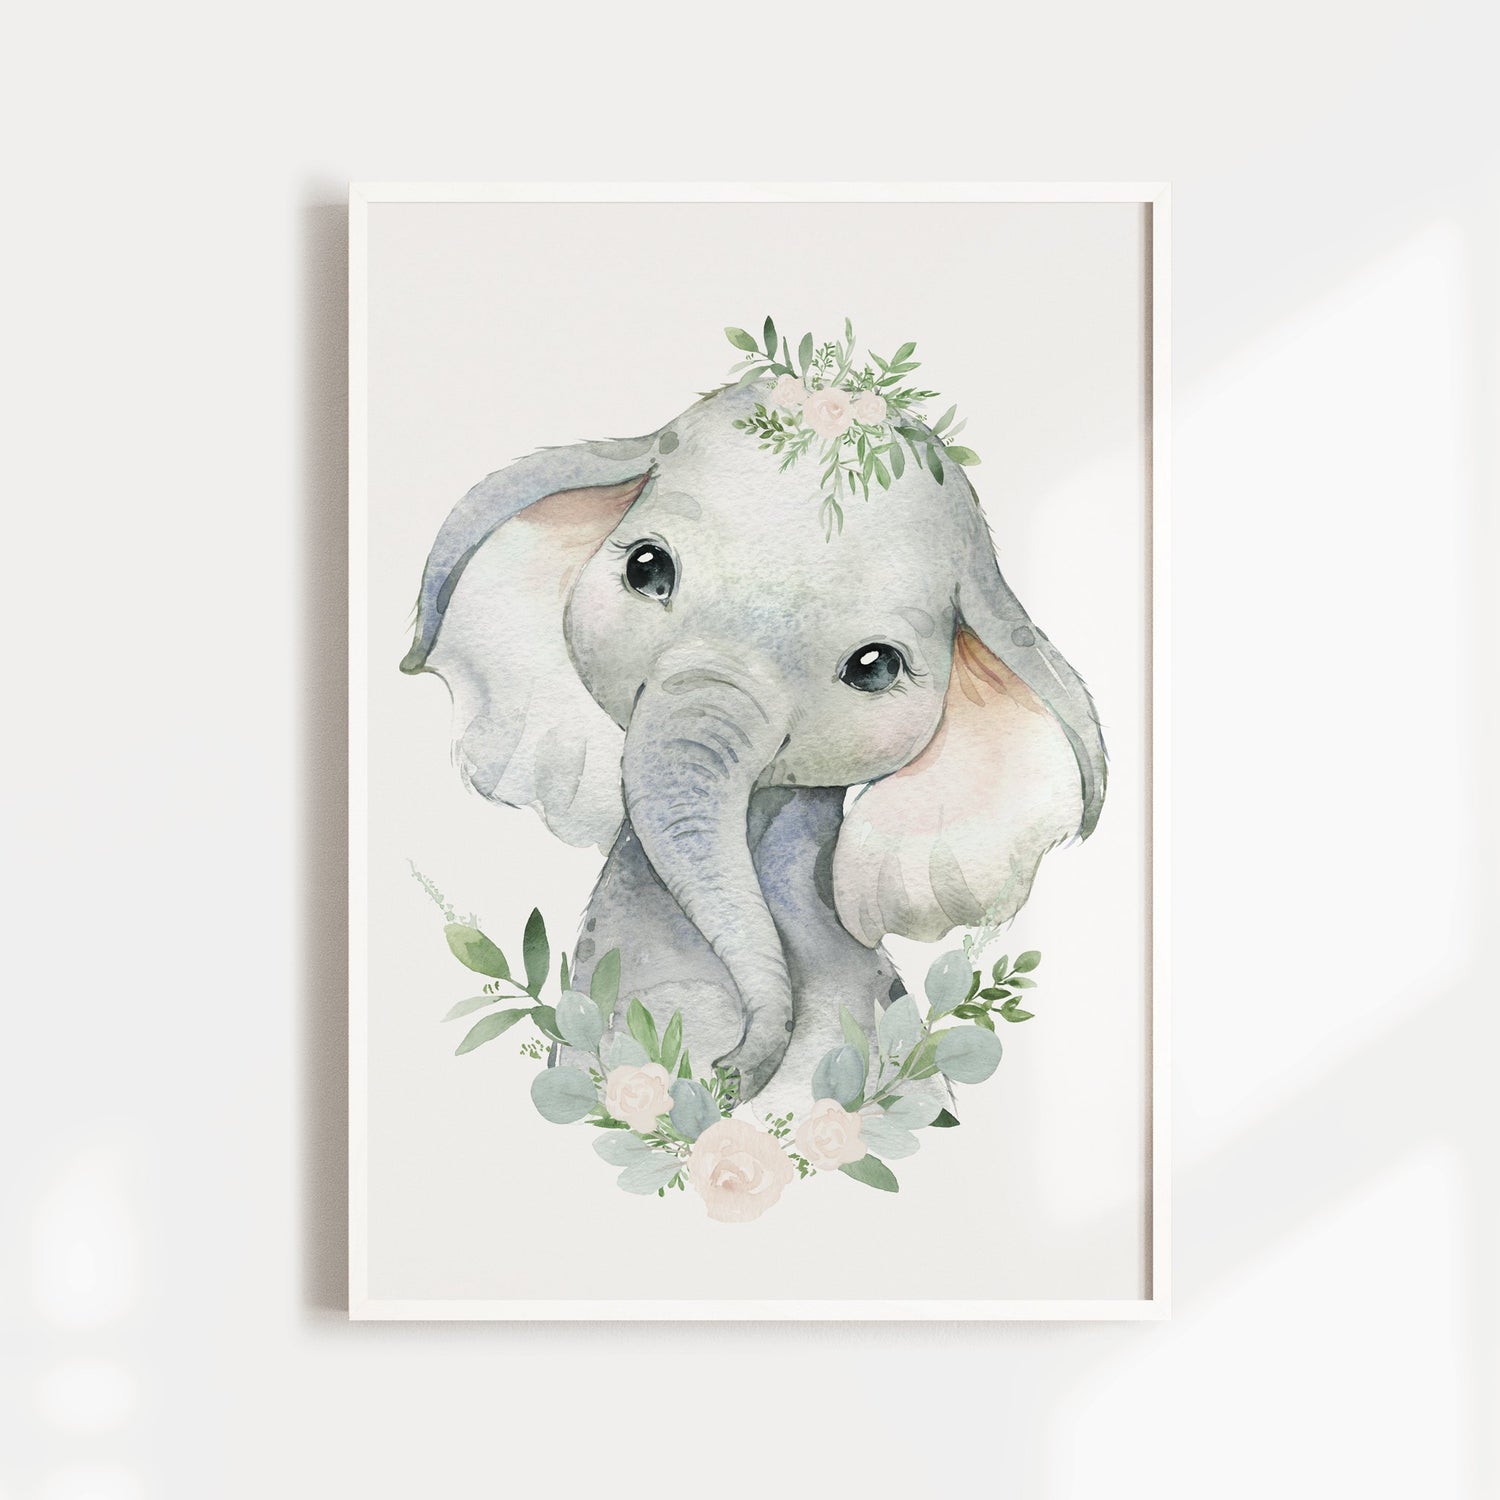 Floral Lion, Elephant & Giraffe Prints